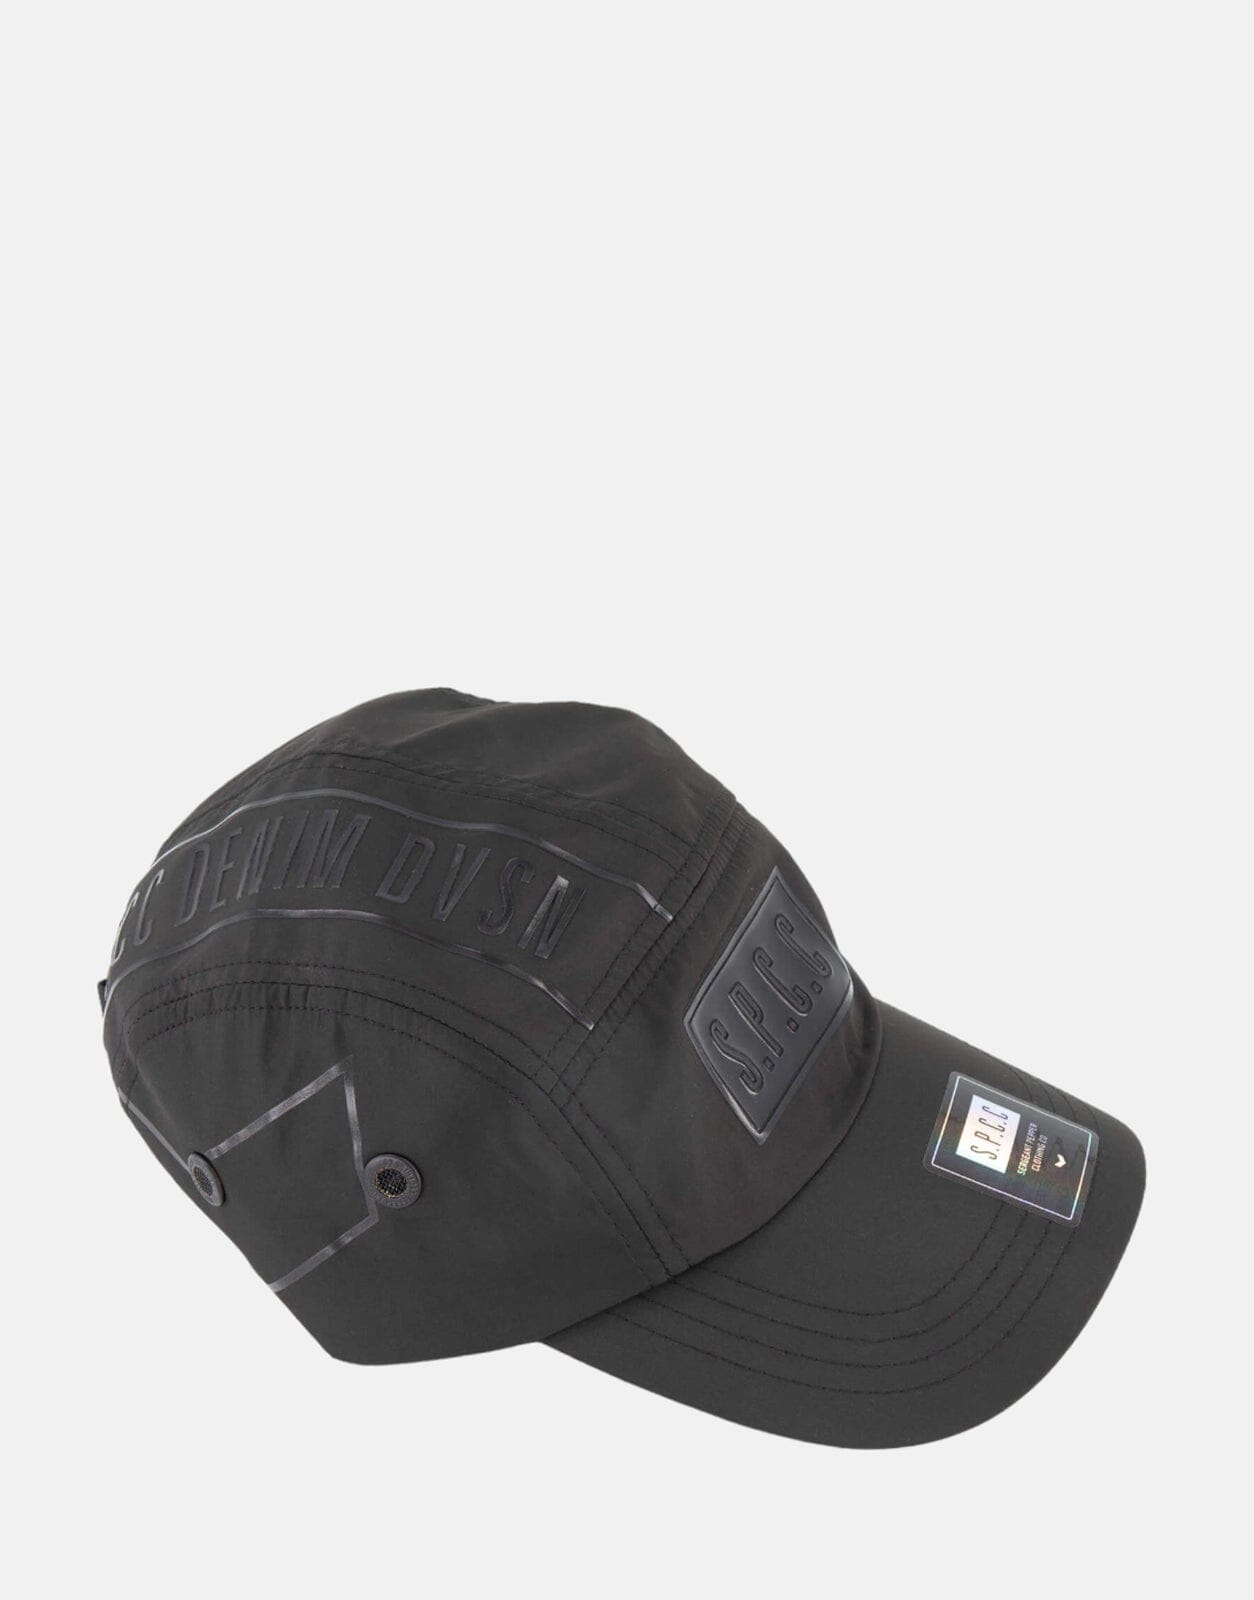 SPCC Silko Black Cap - Subwear